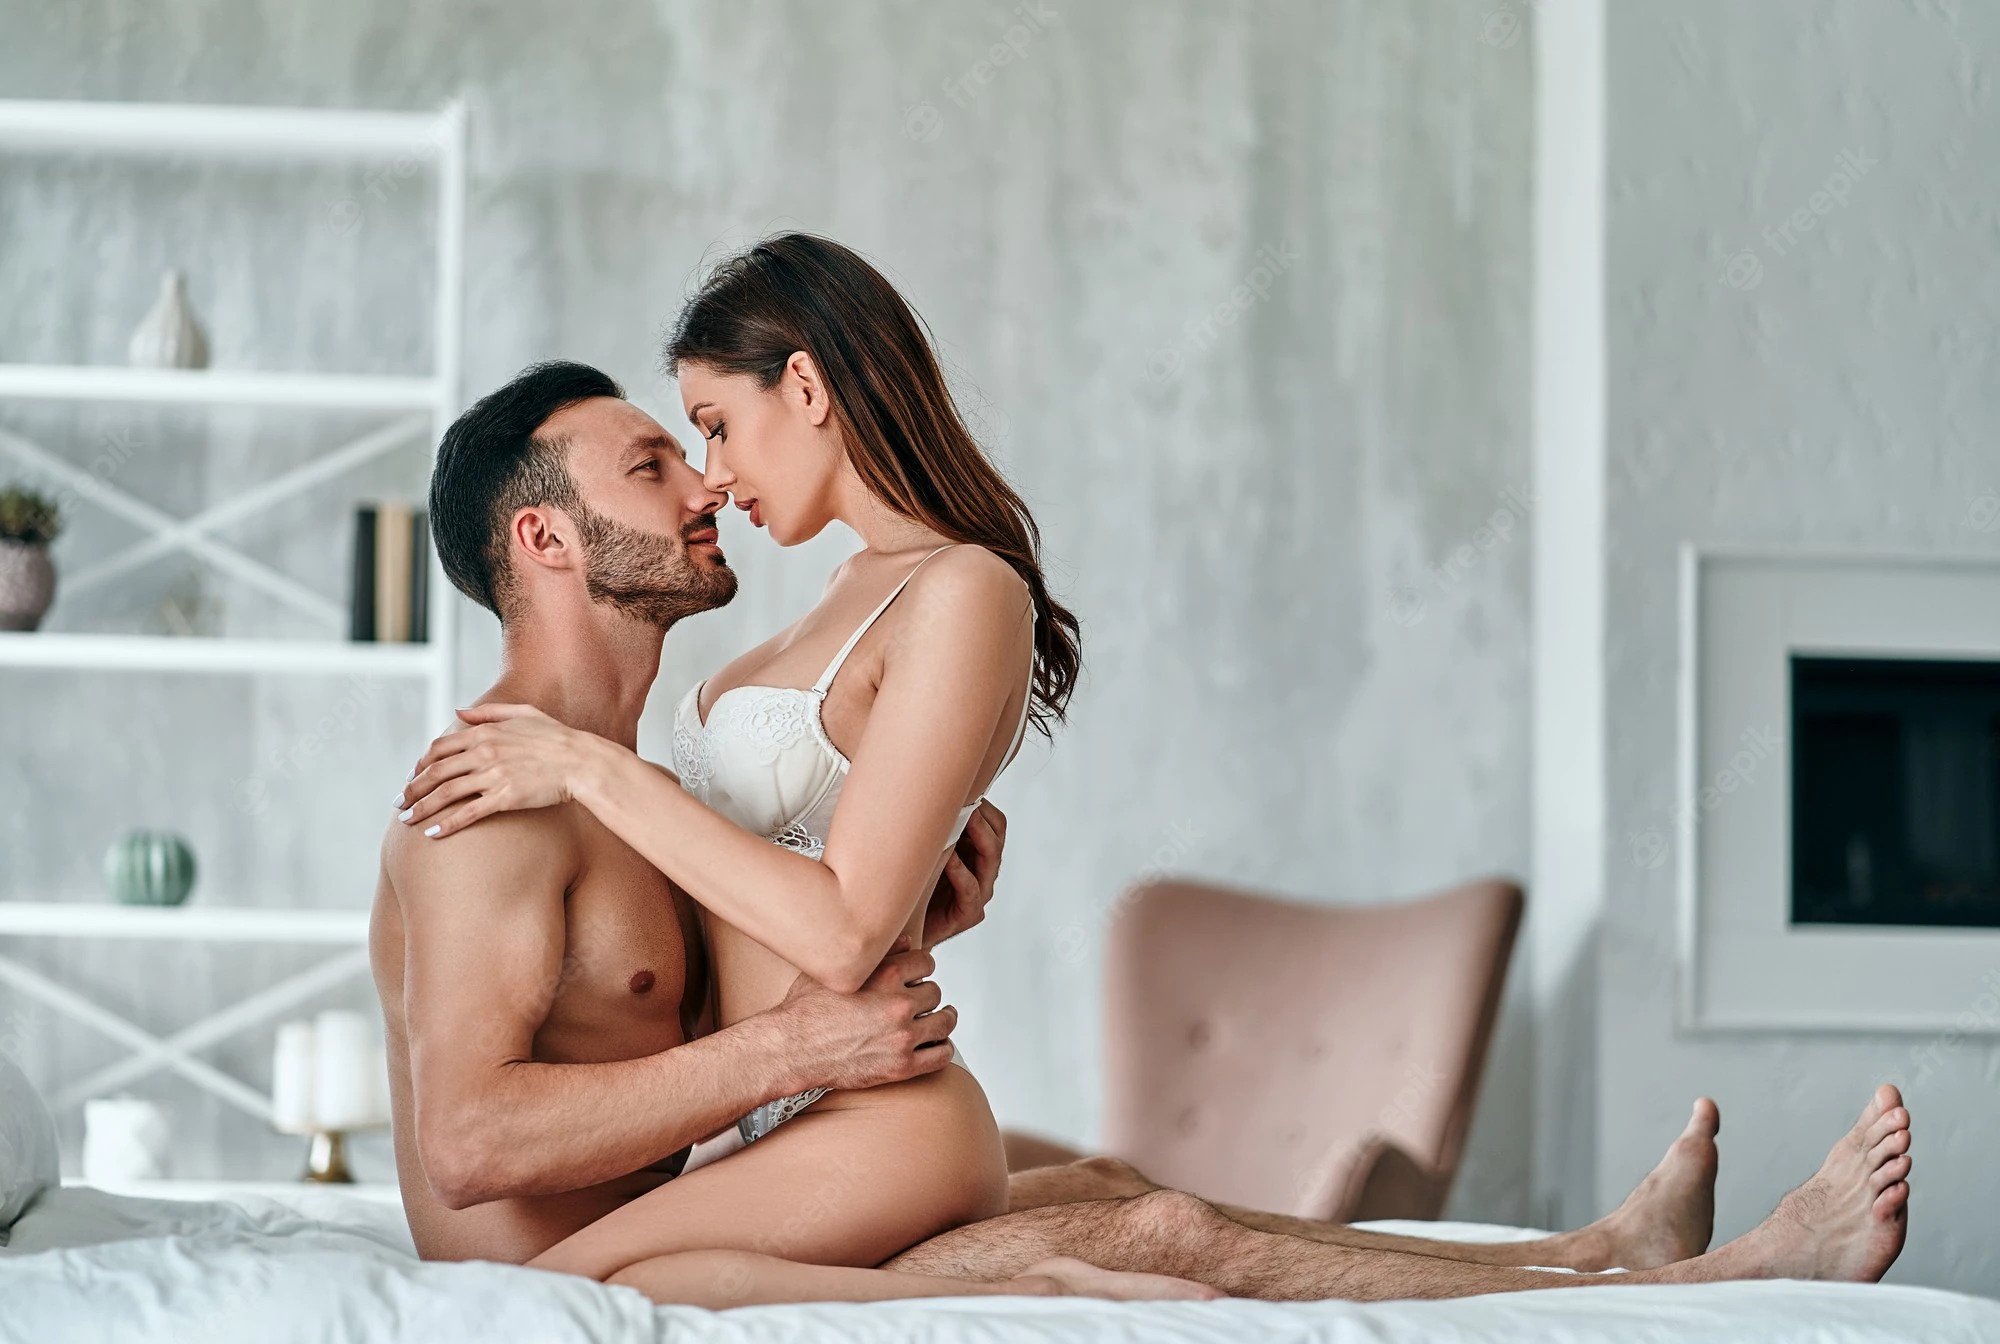 Www Romantic Viodes - Top 2 Best Sites To Watch Romantic Porn Videos 2022